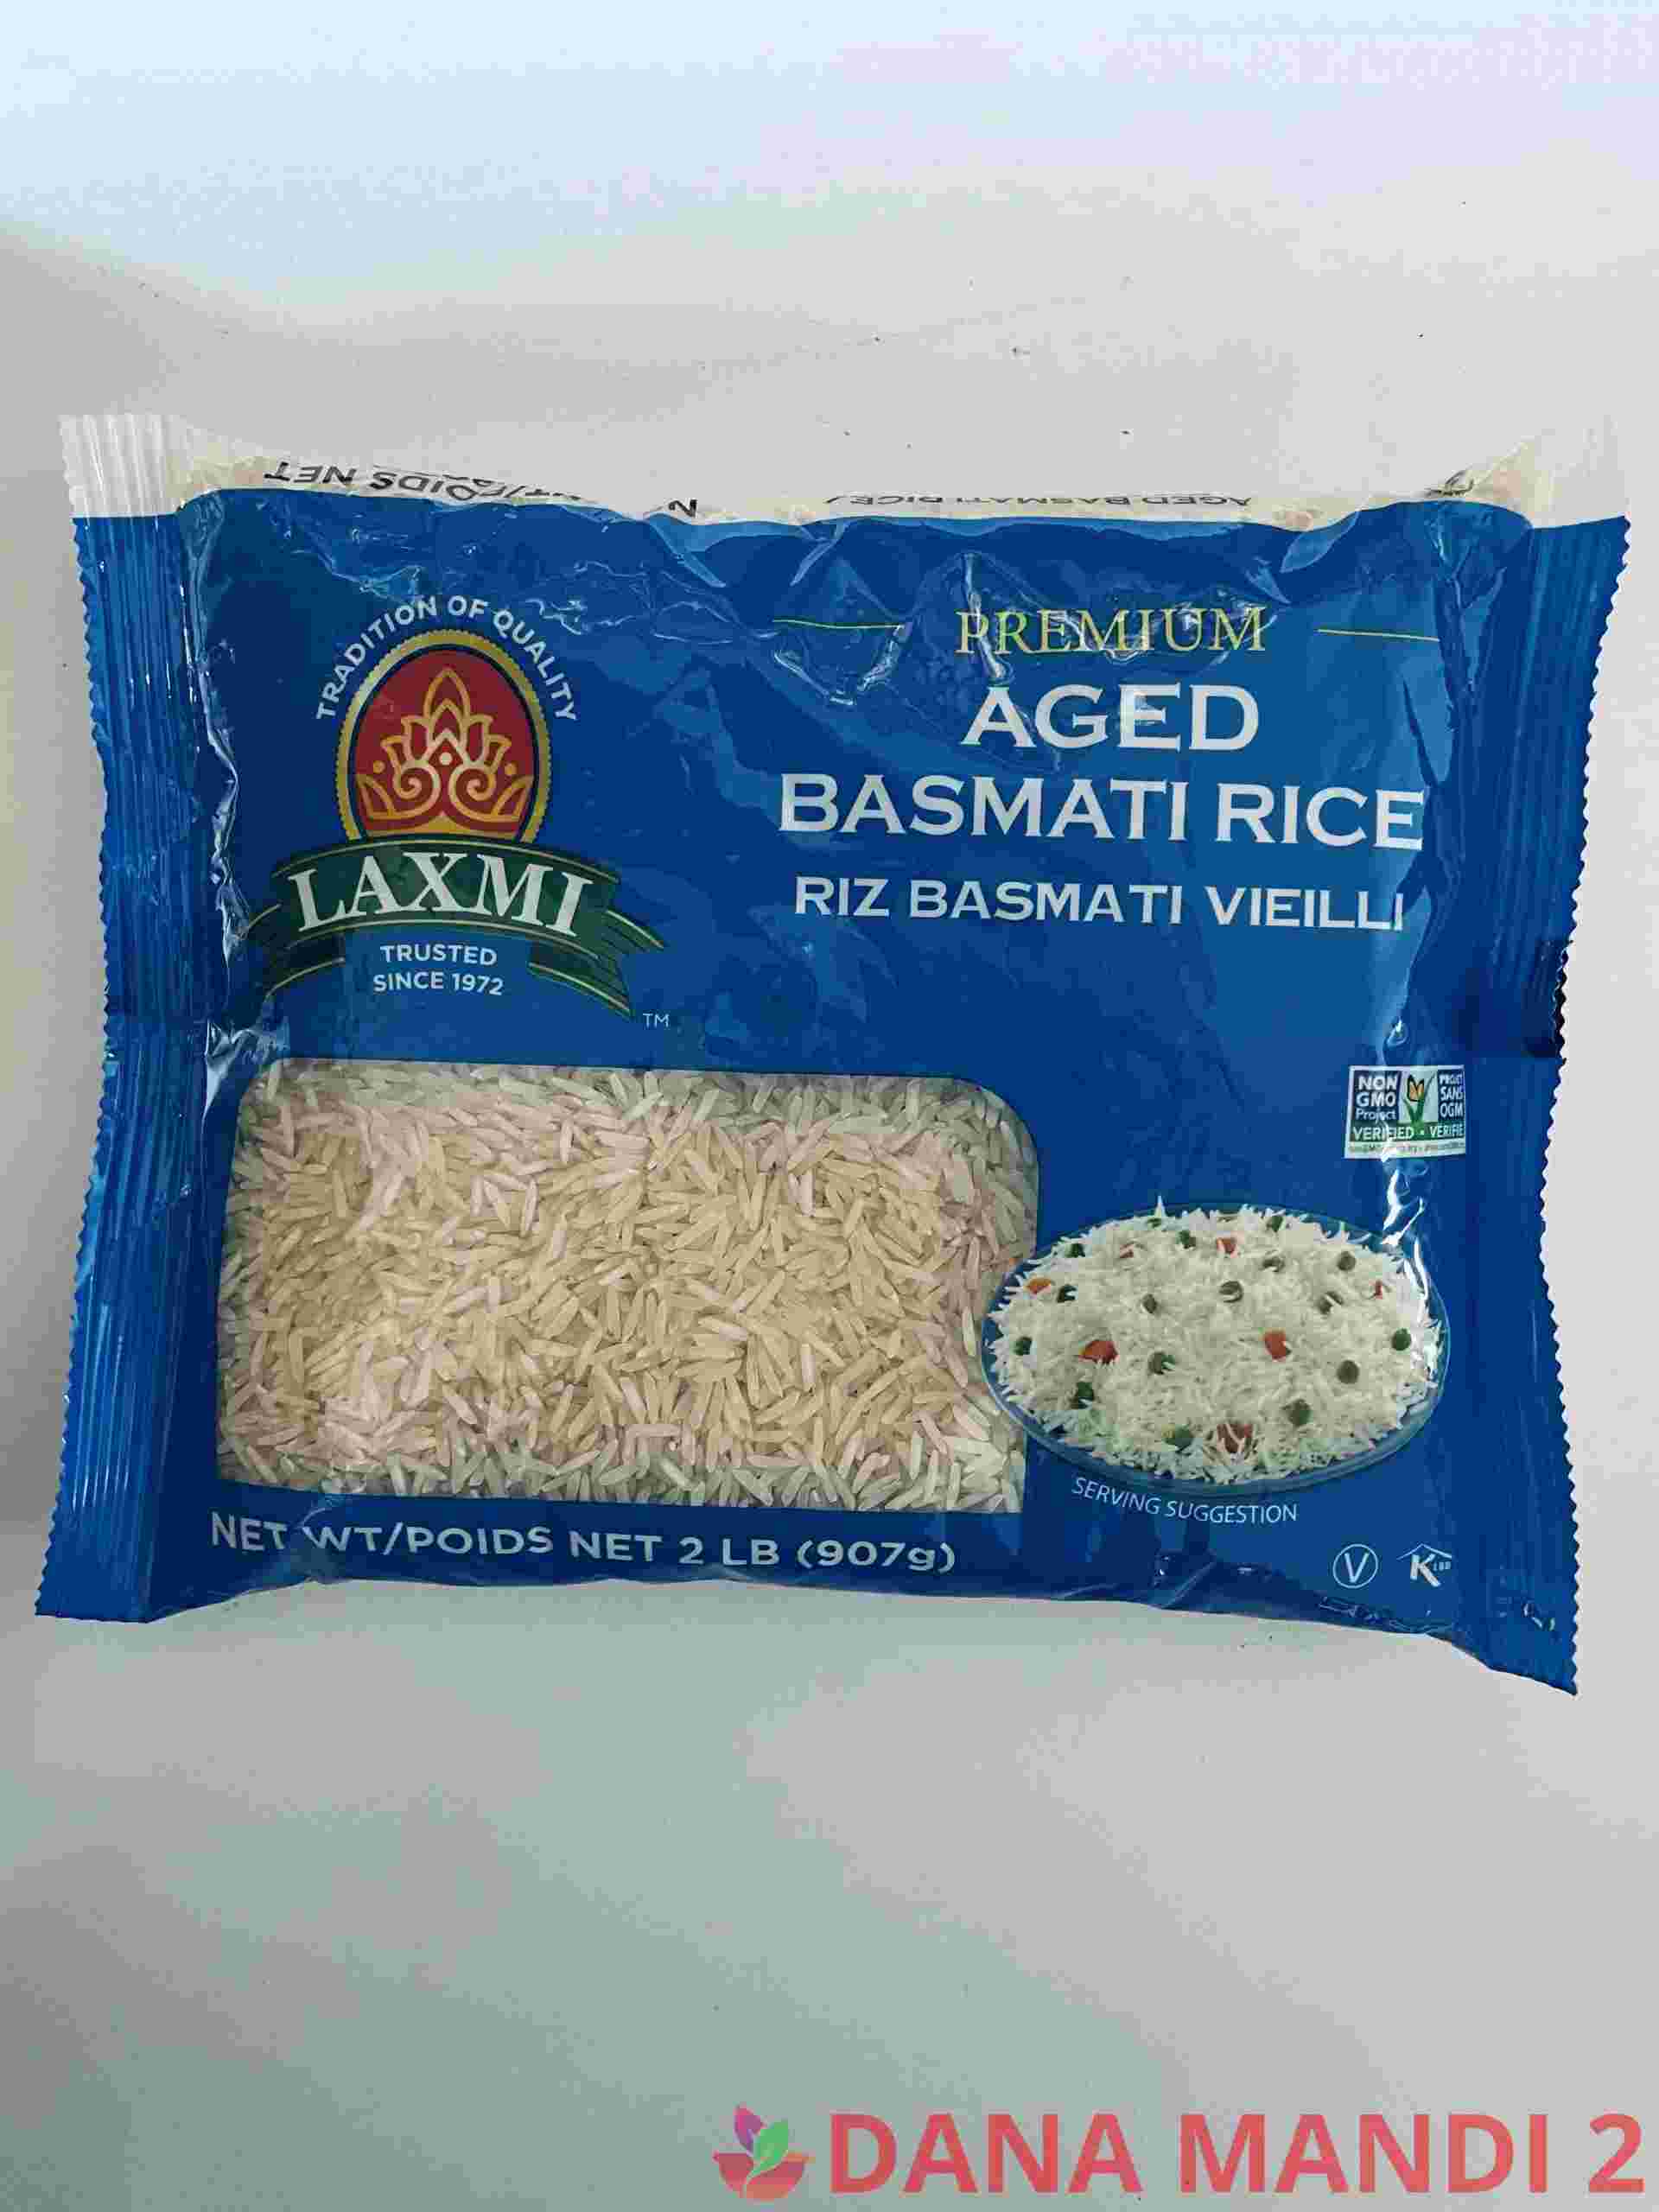 Laxmi Aged Basmati Rice